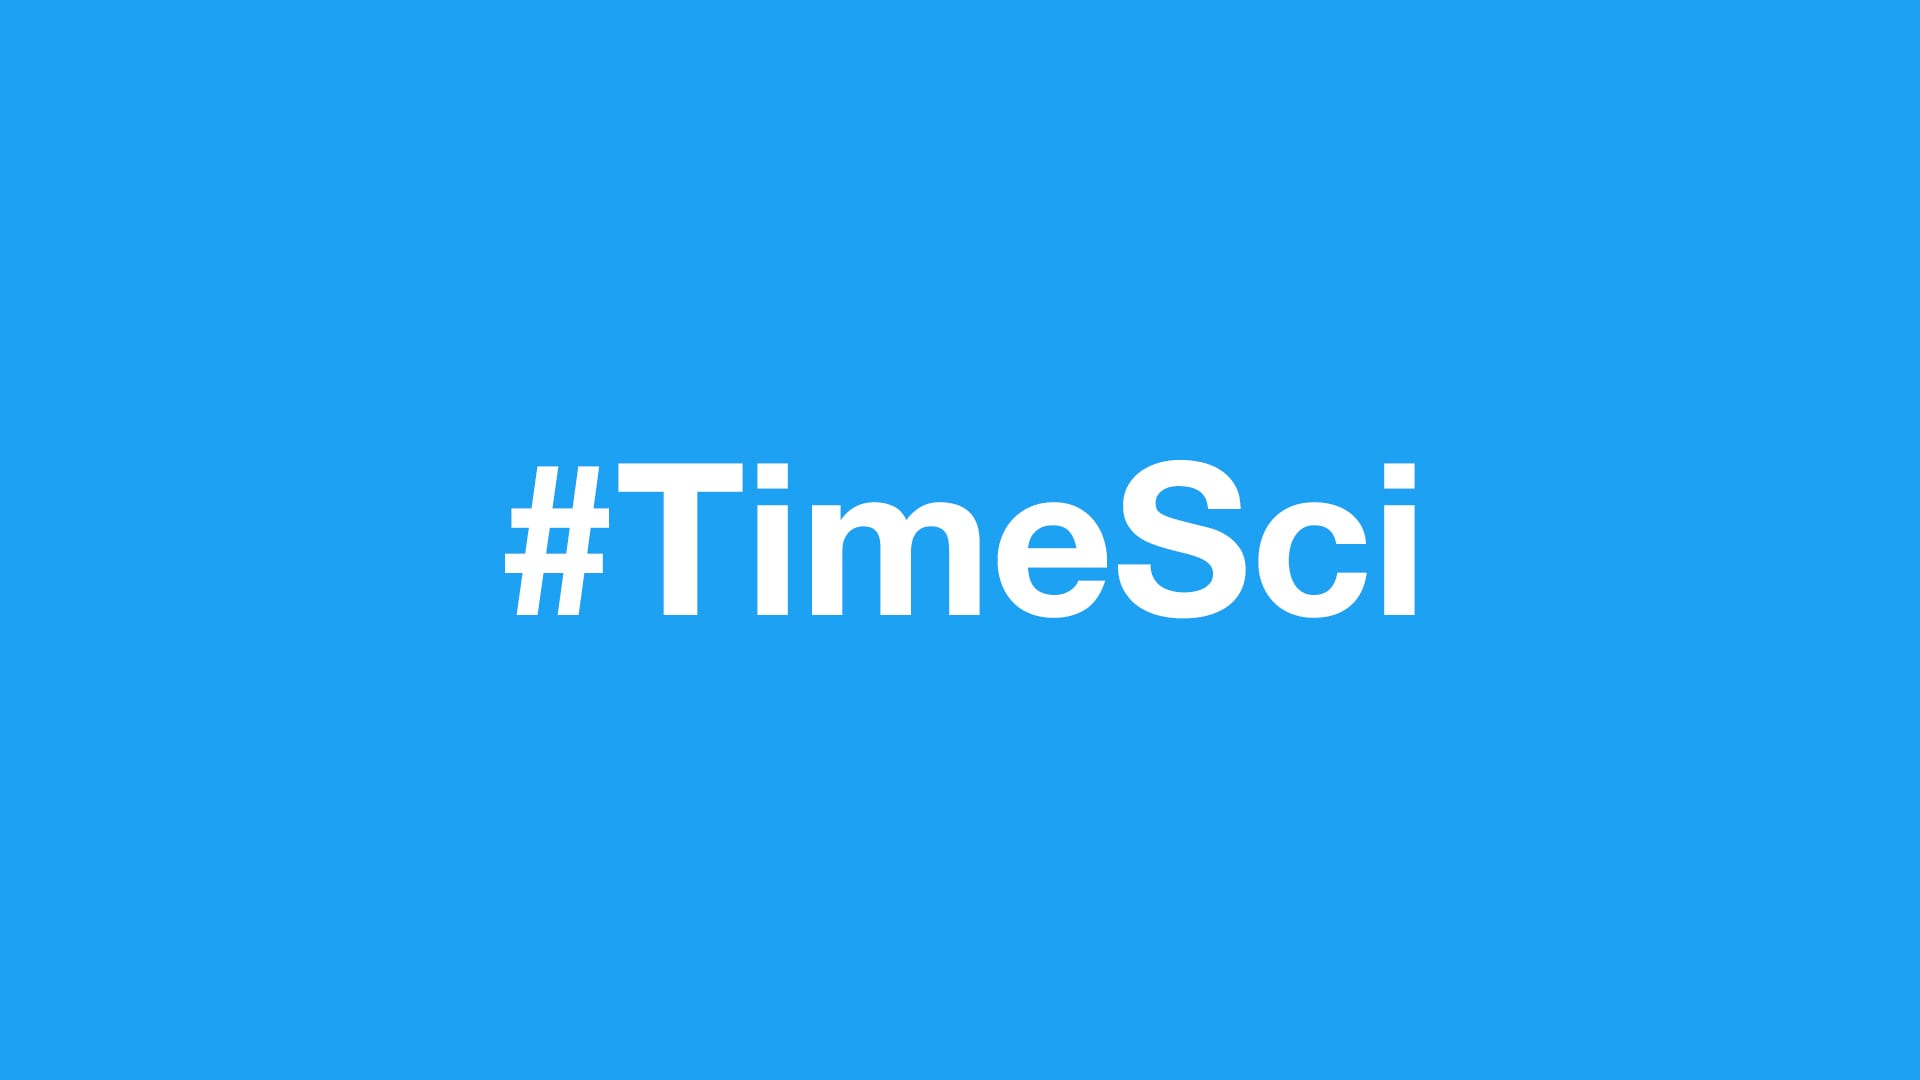 TimeSci Twitter Tips